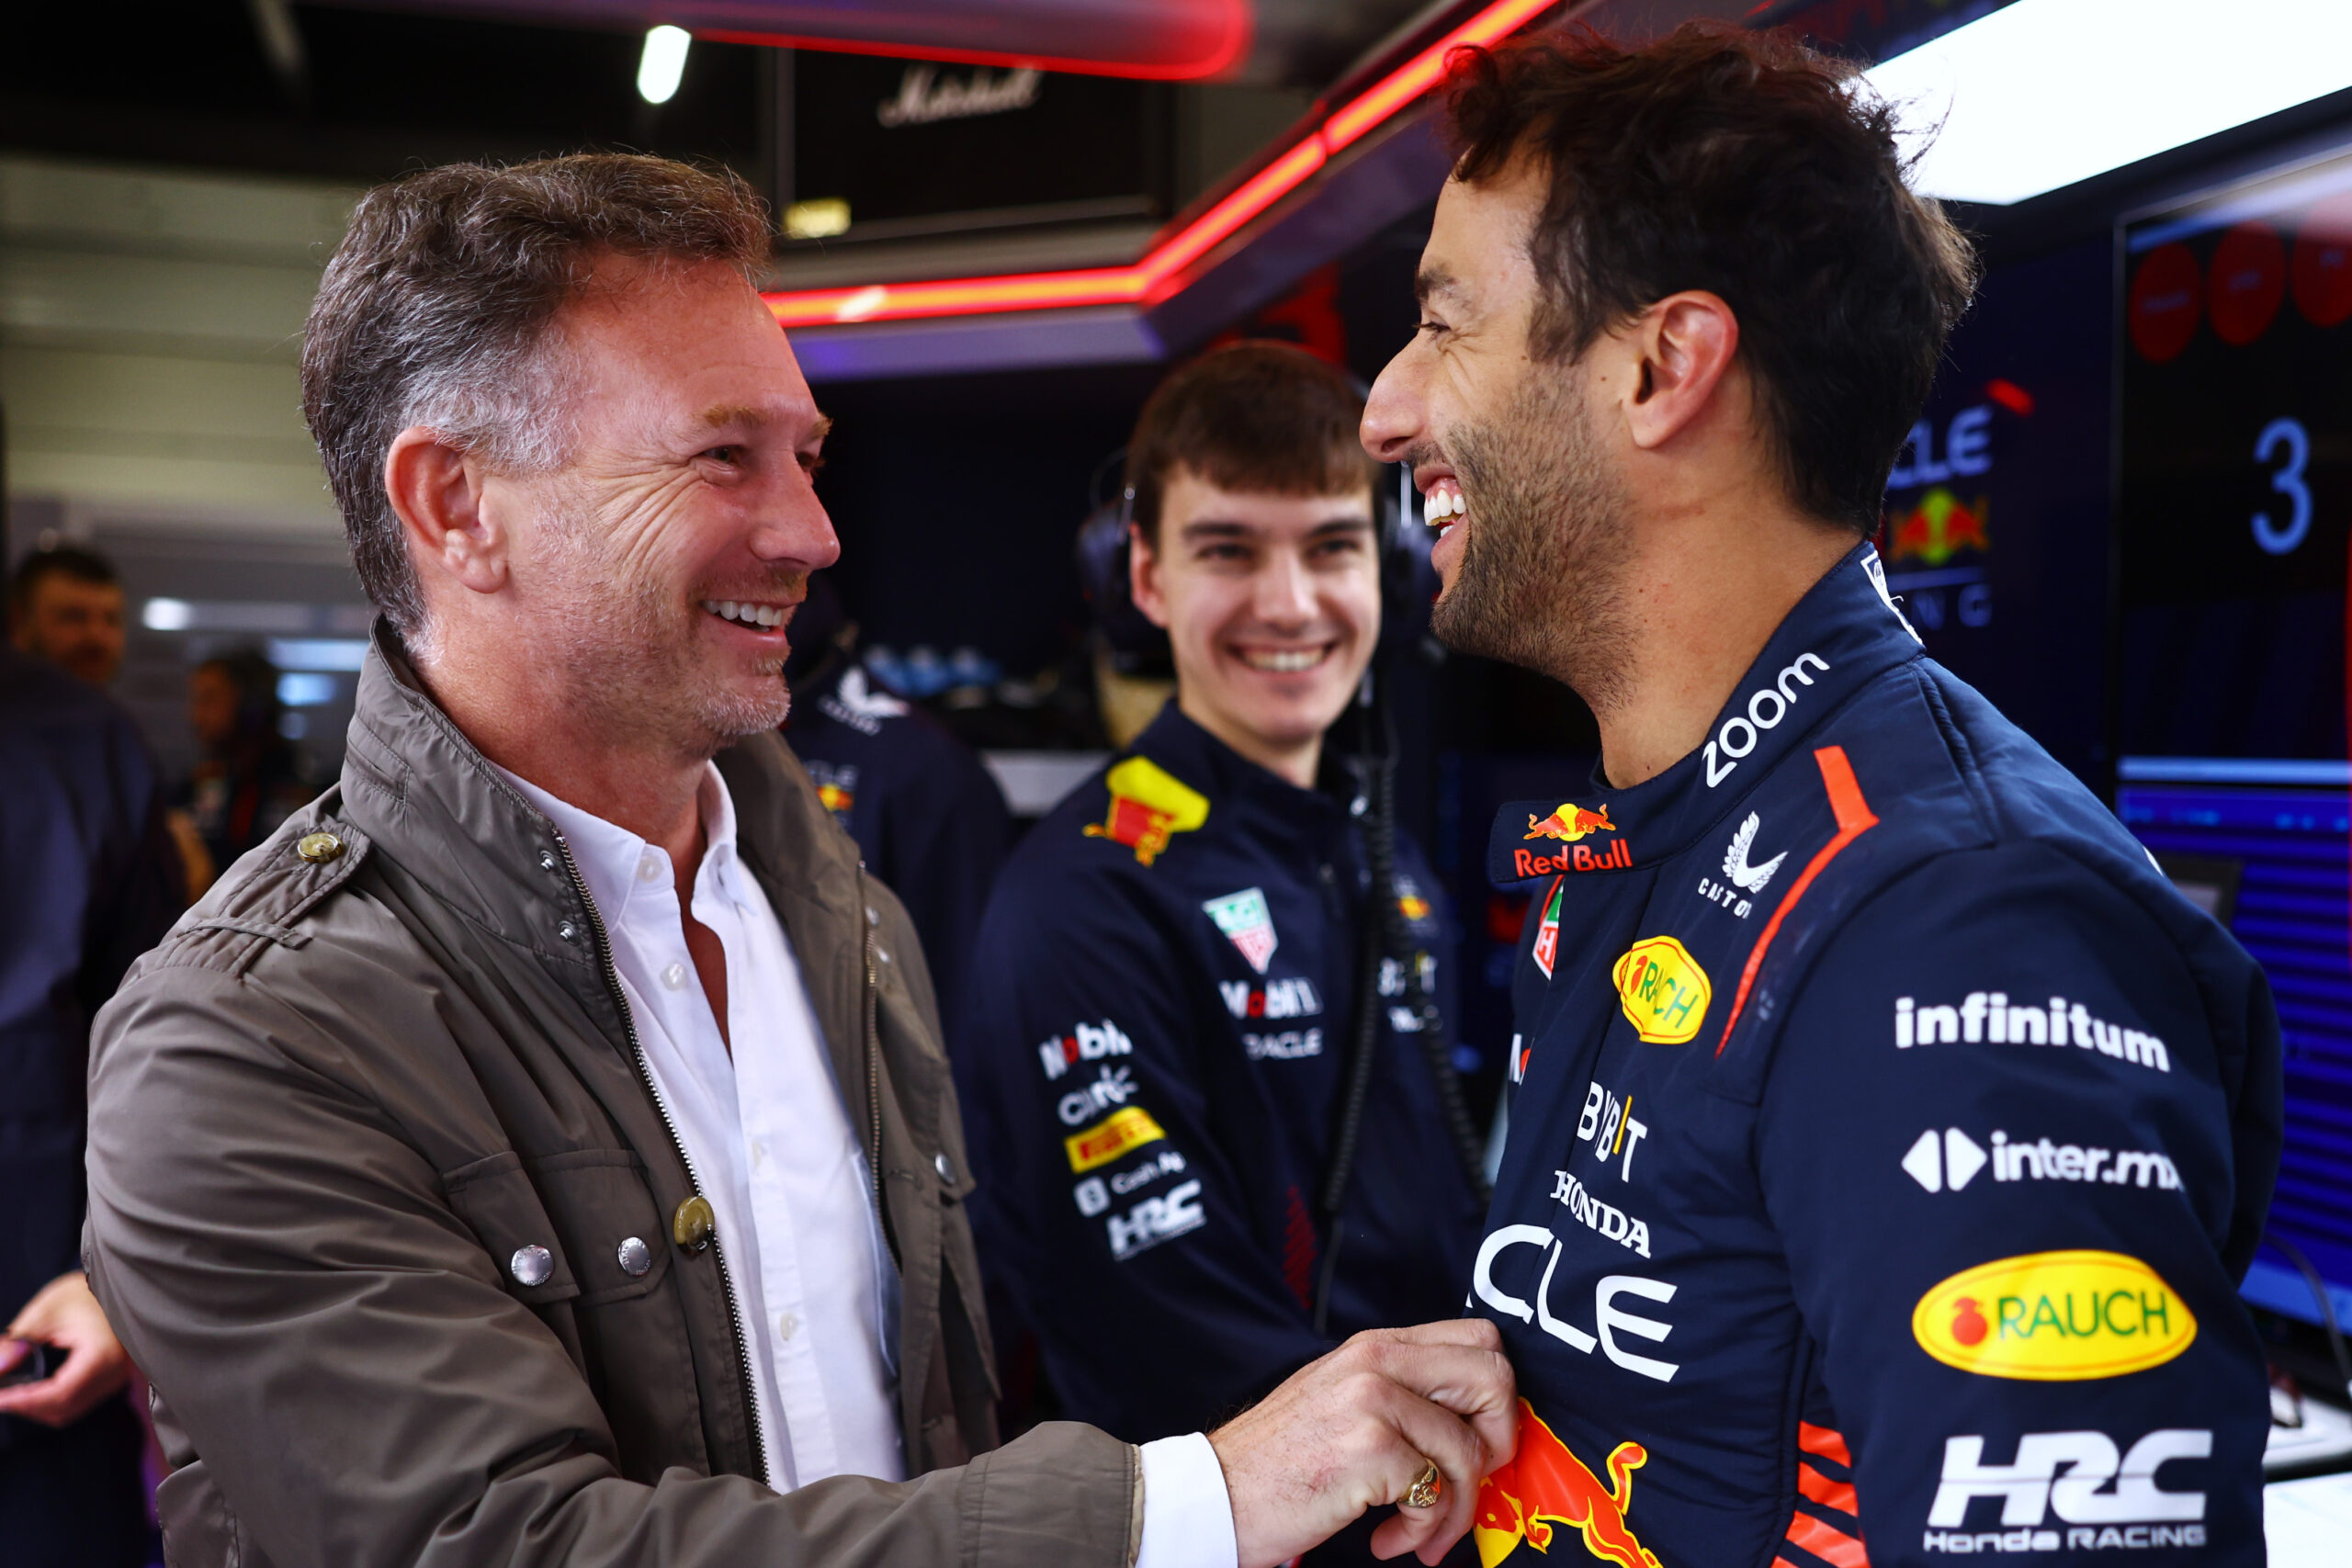 Red Bull’s Hot Seat and the Daniel Ricciardo Factor